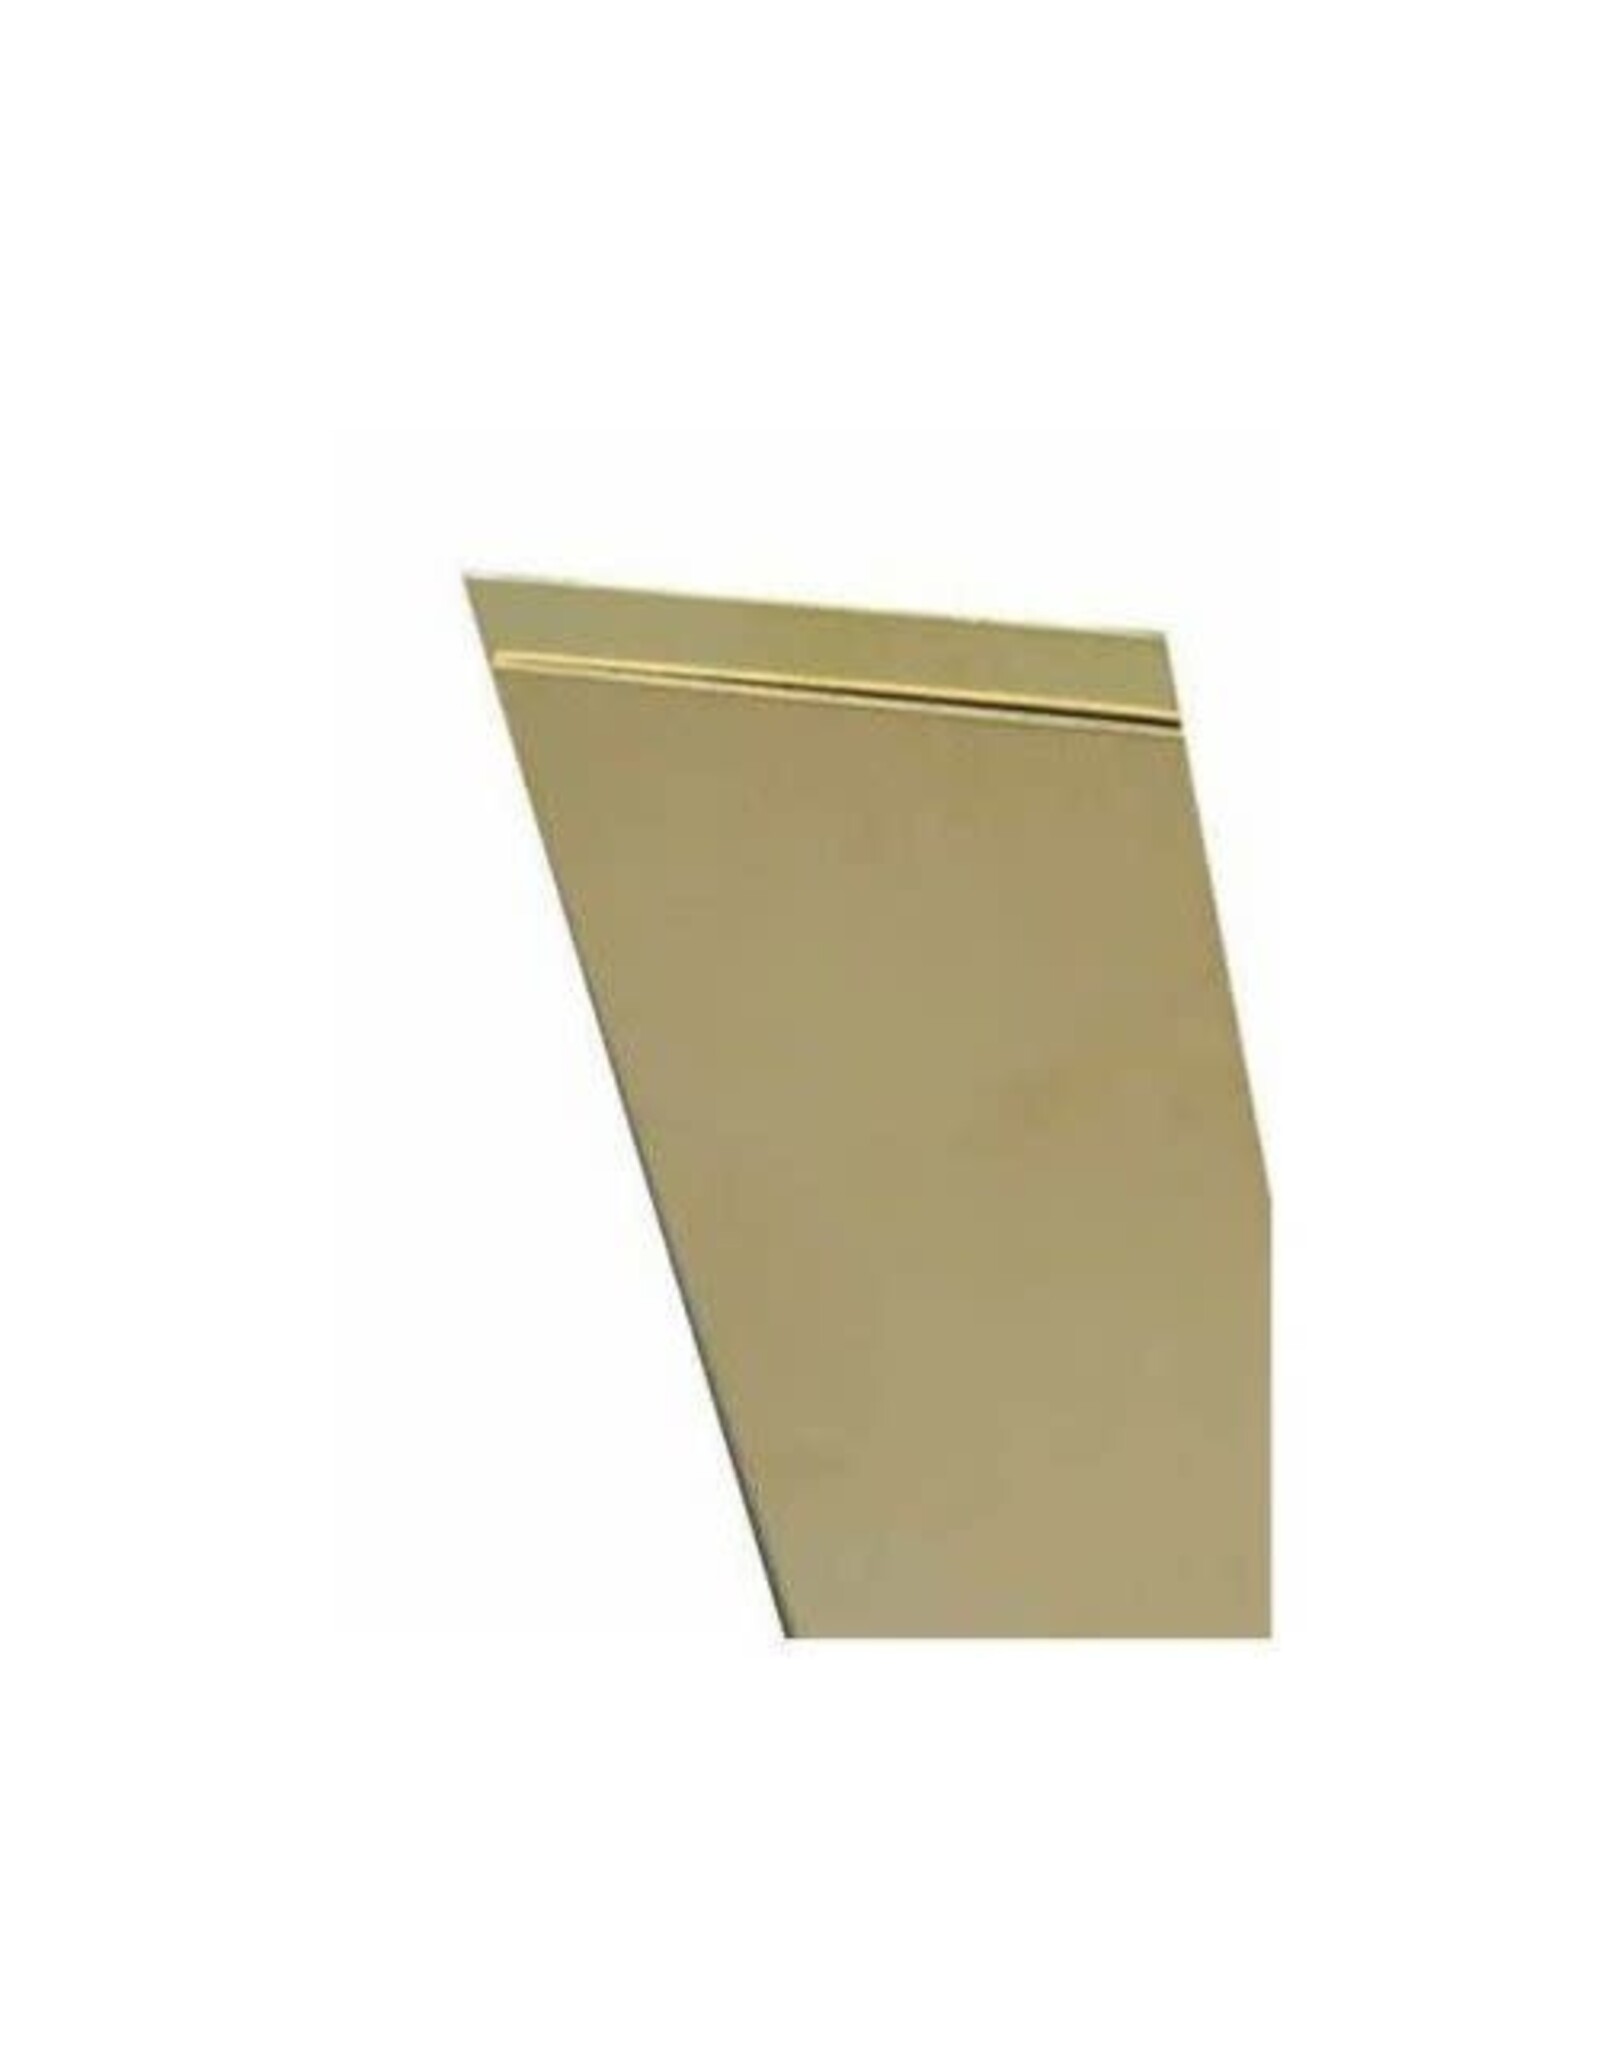 K&S Engeering .015 x 4 x 10" Brass Sheet